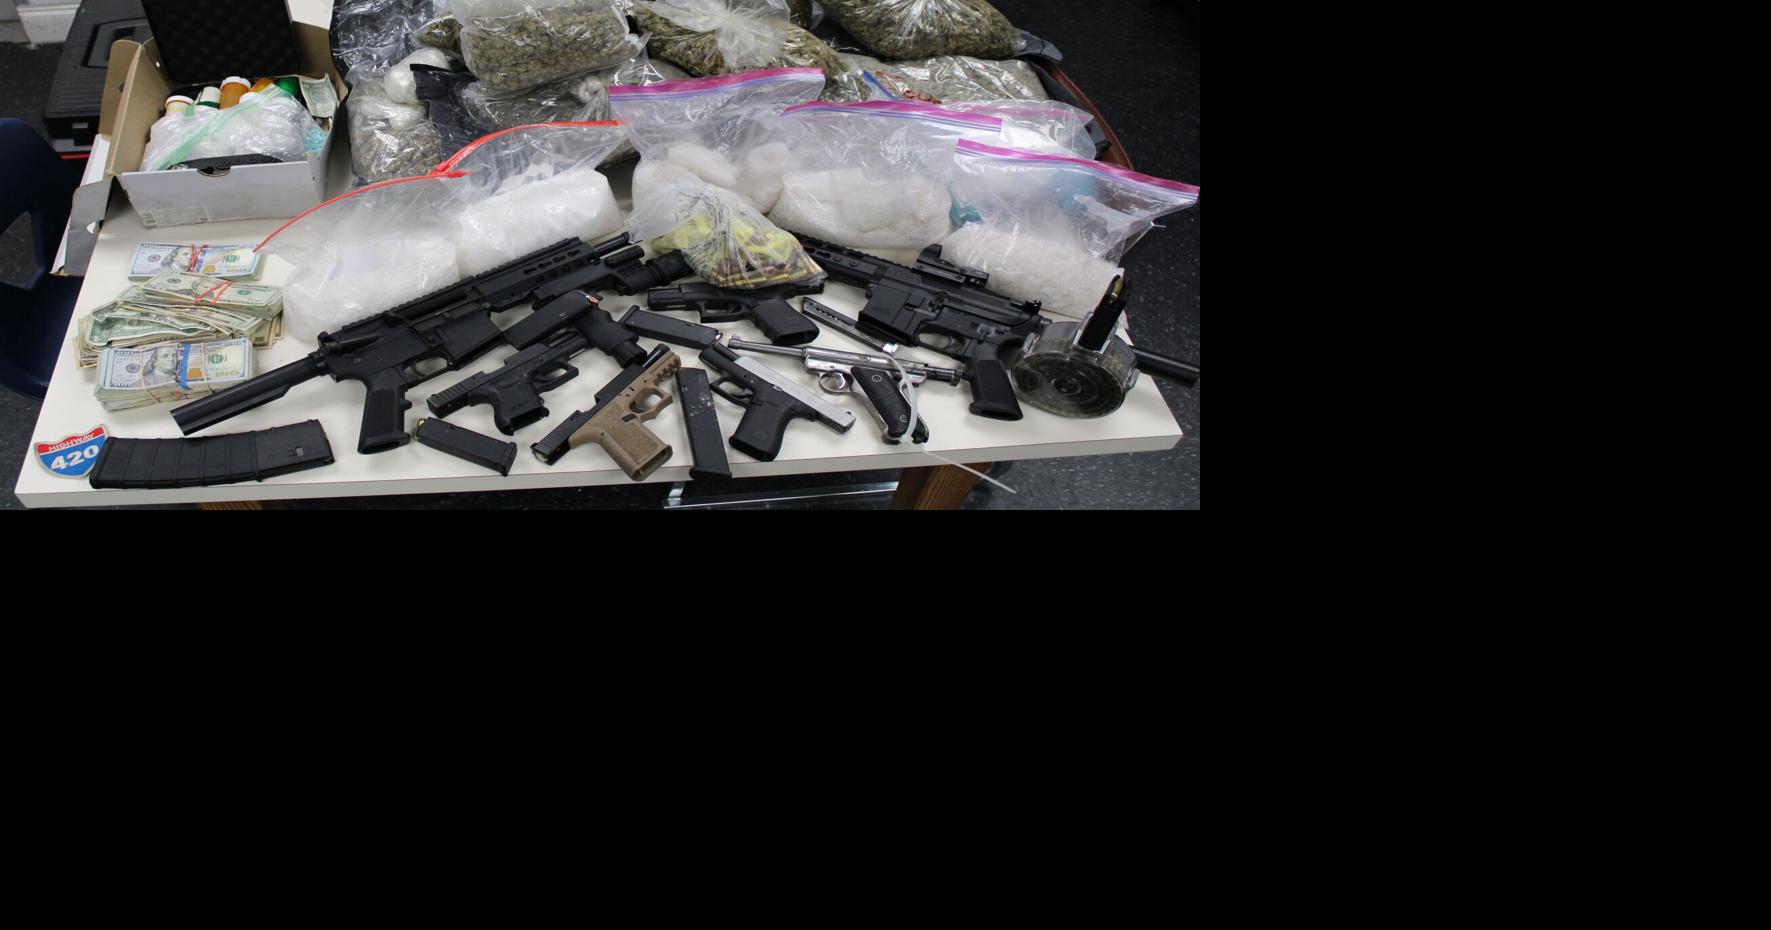 Acton bust yields weapons, marijuana, News